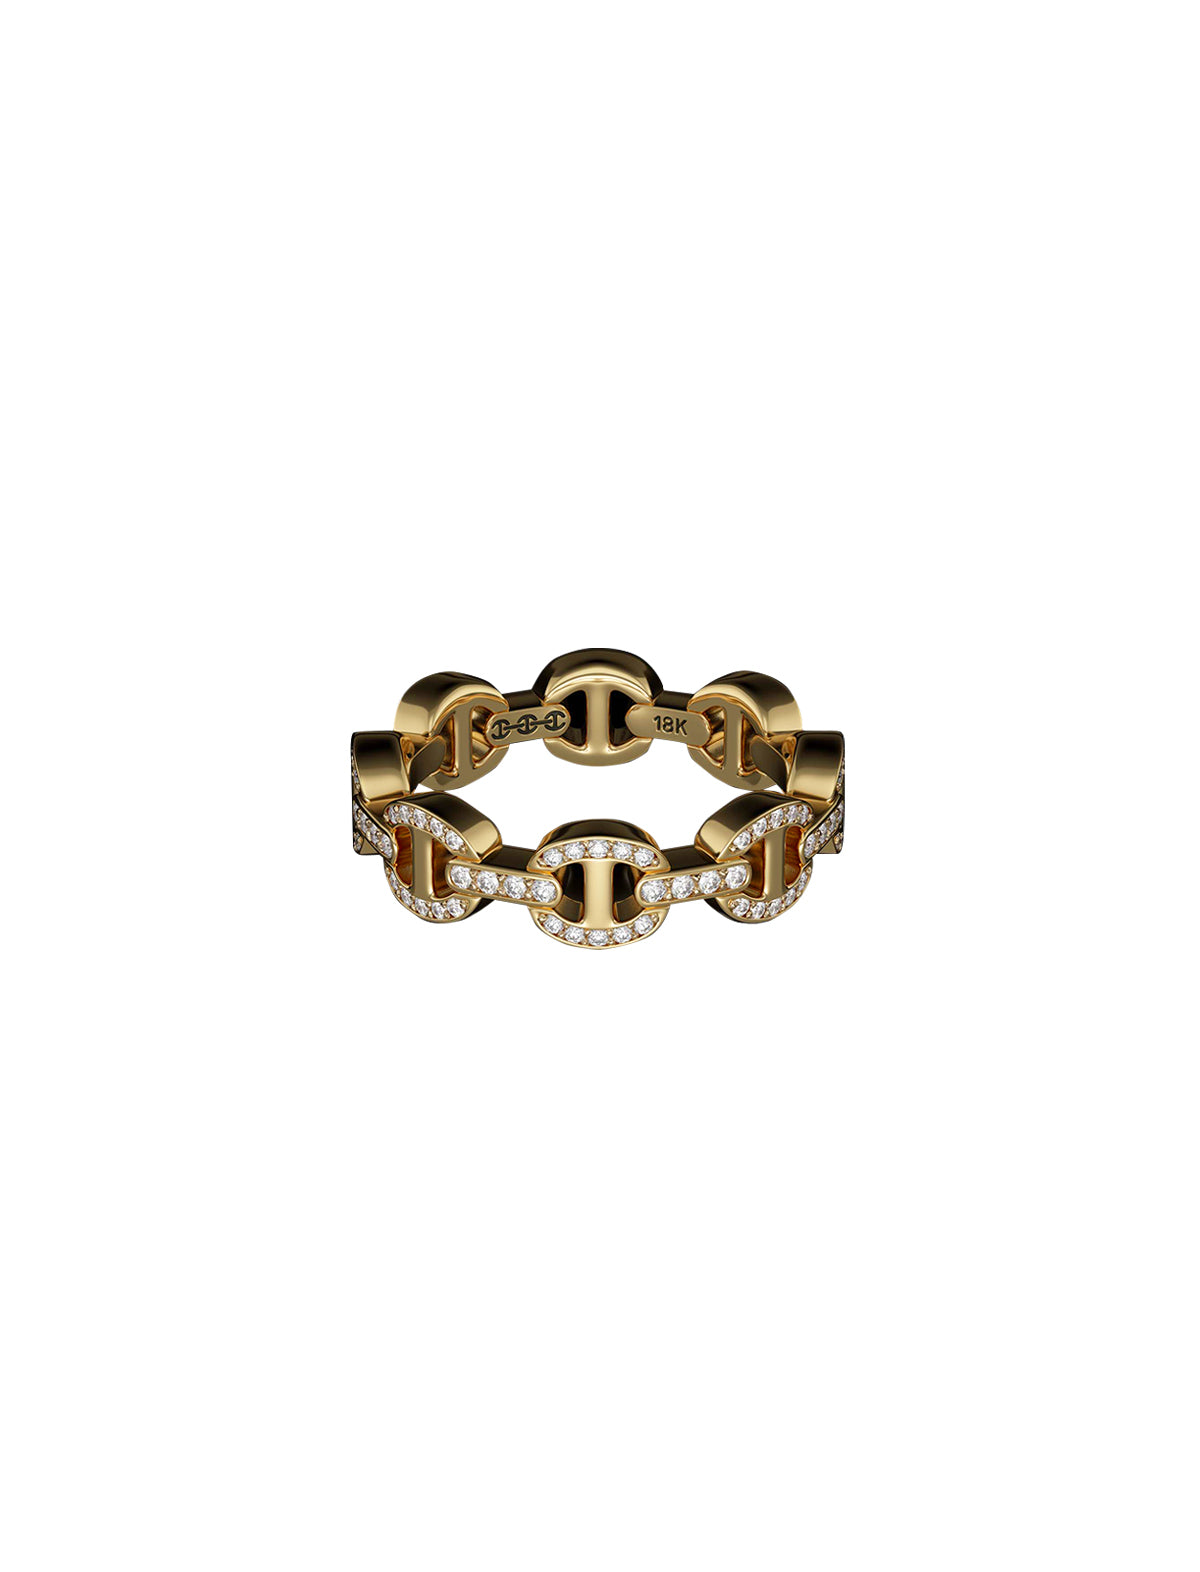 HOORSENBUHS Dame Tri-Link Antiquated Ring 18k Yellow Gold